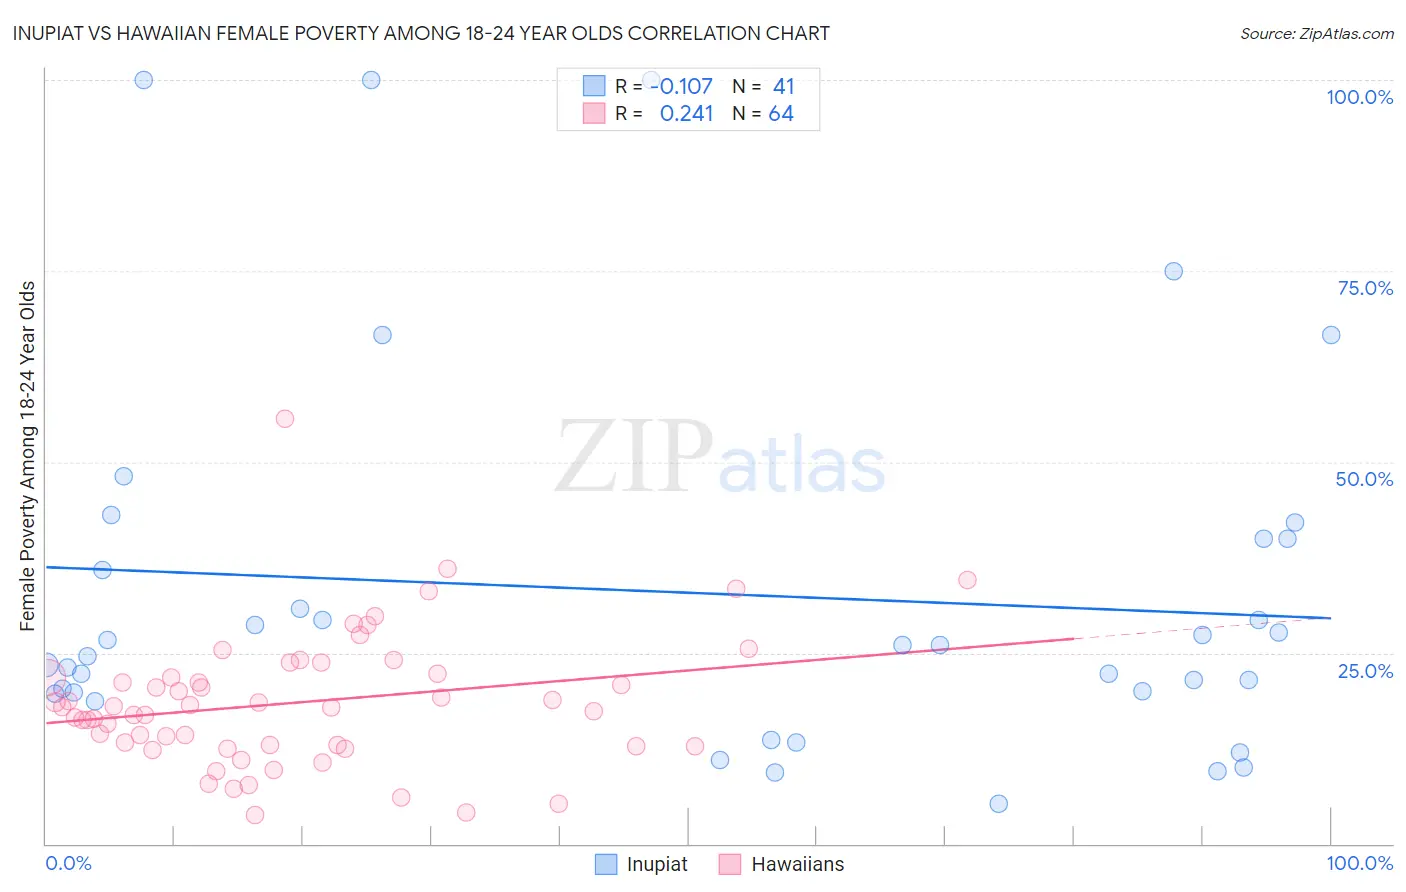 Inupiat vs Hawaiian Female Poverty Among 18-24 Year Olds